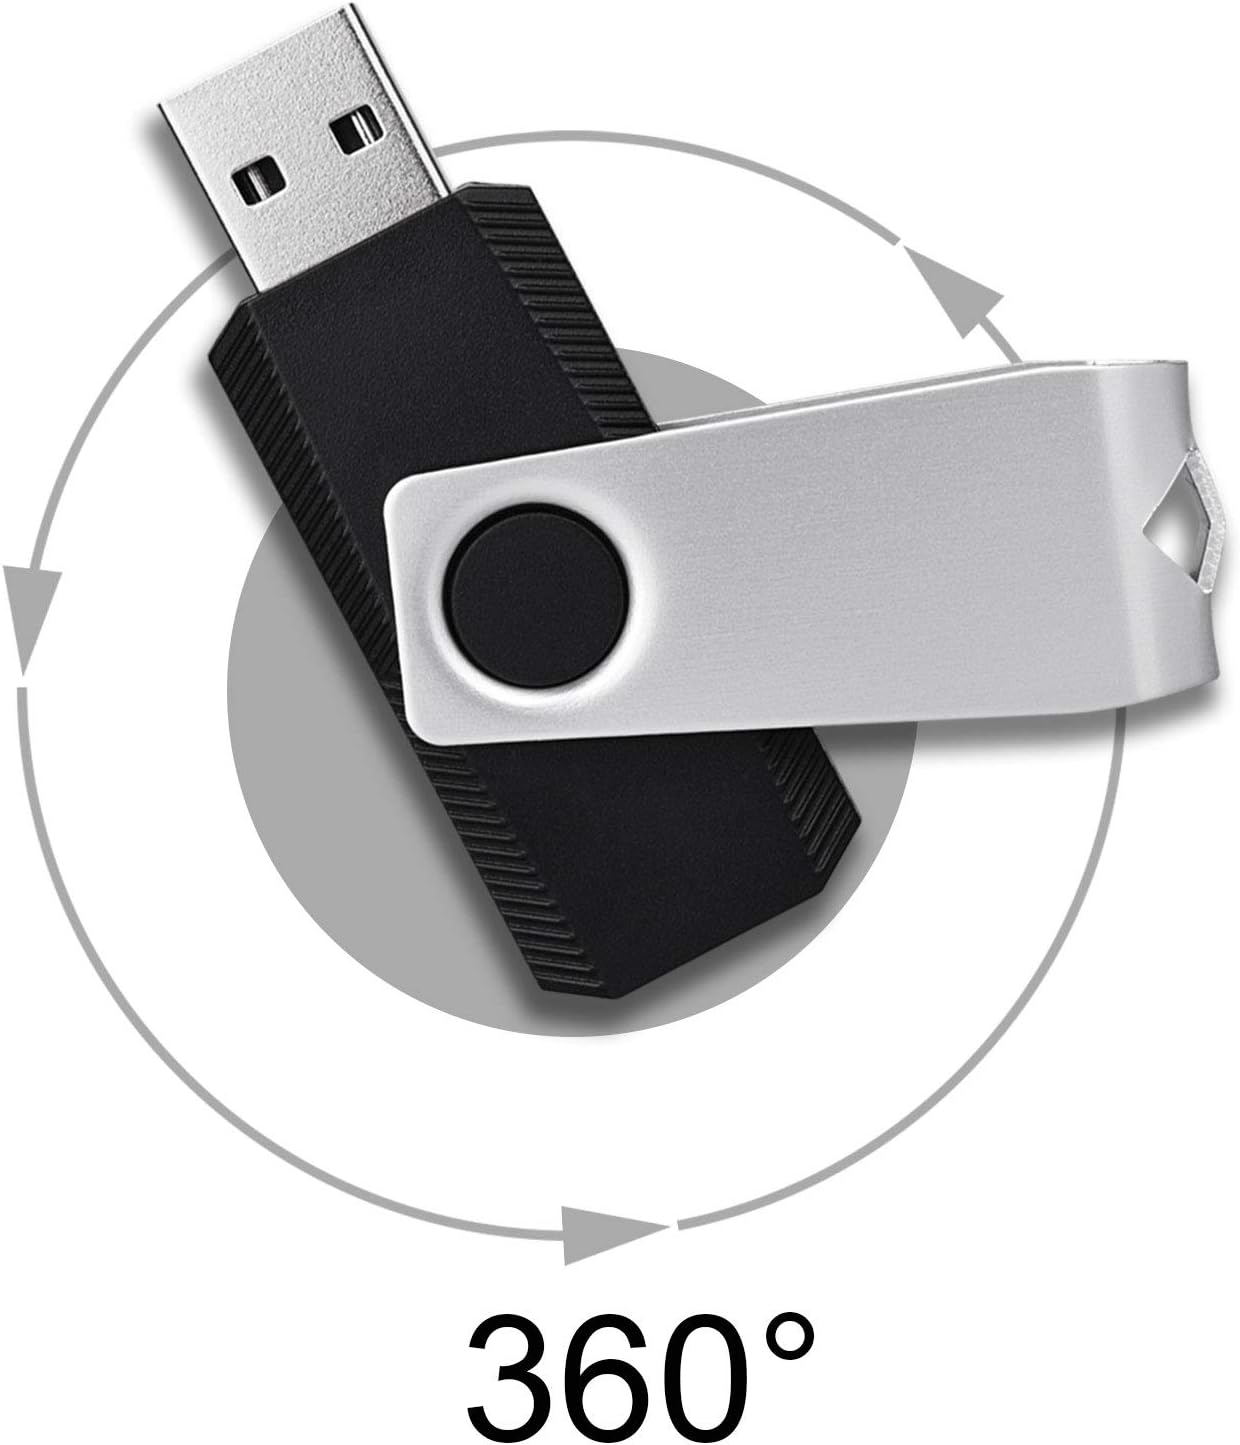 128GB Swivel USB 3.0 Flash Drive, Color (Black-Single)